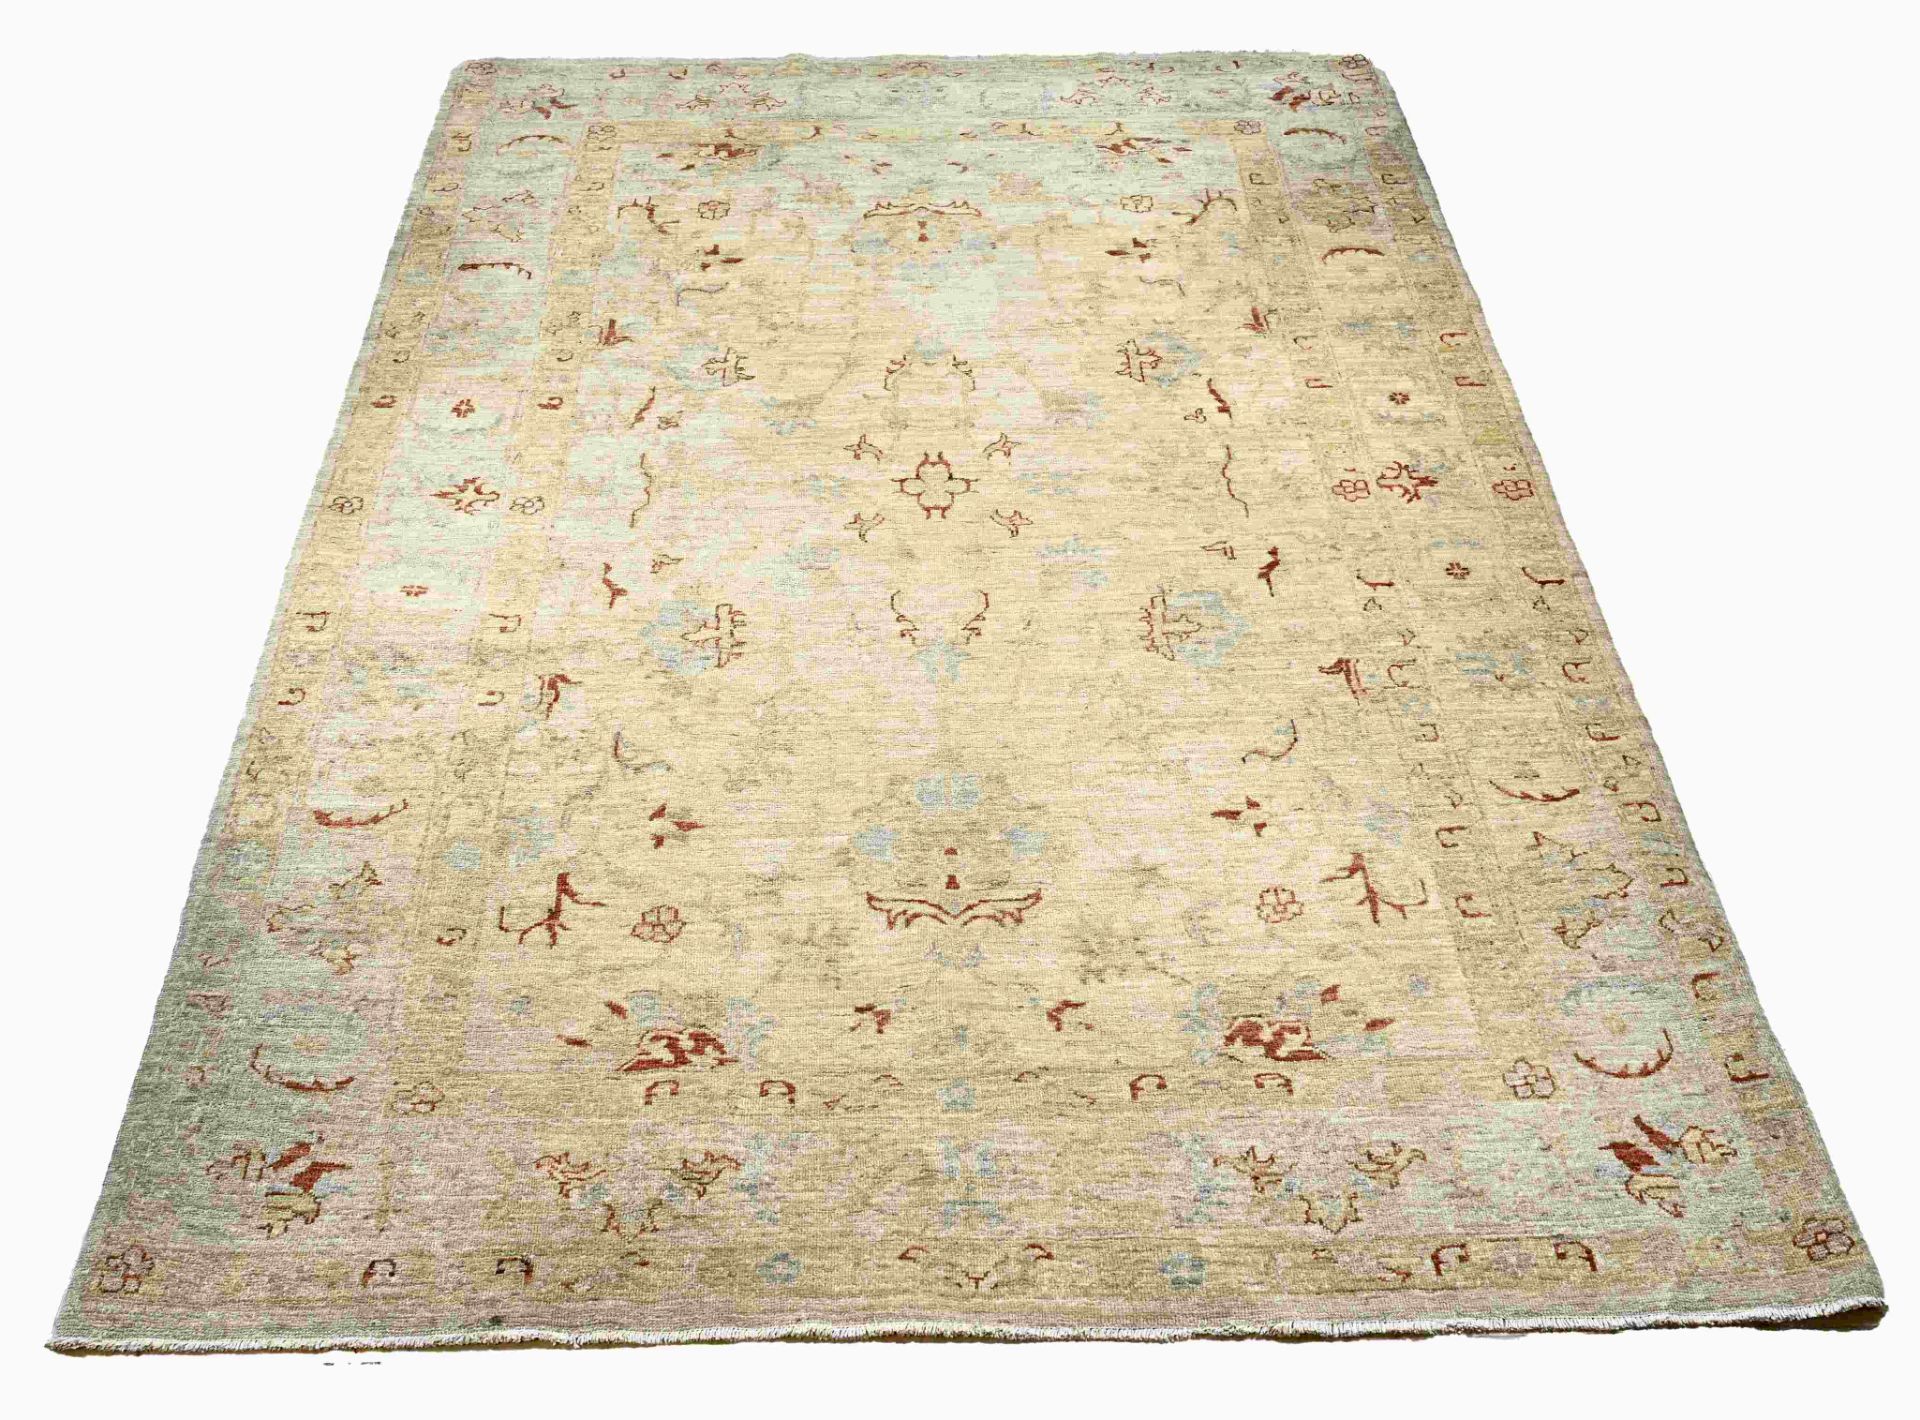 Syrian carpet, 250 x 168 cm.